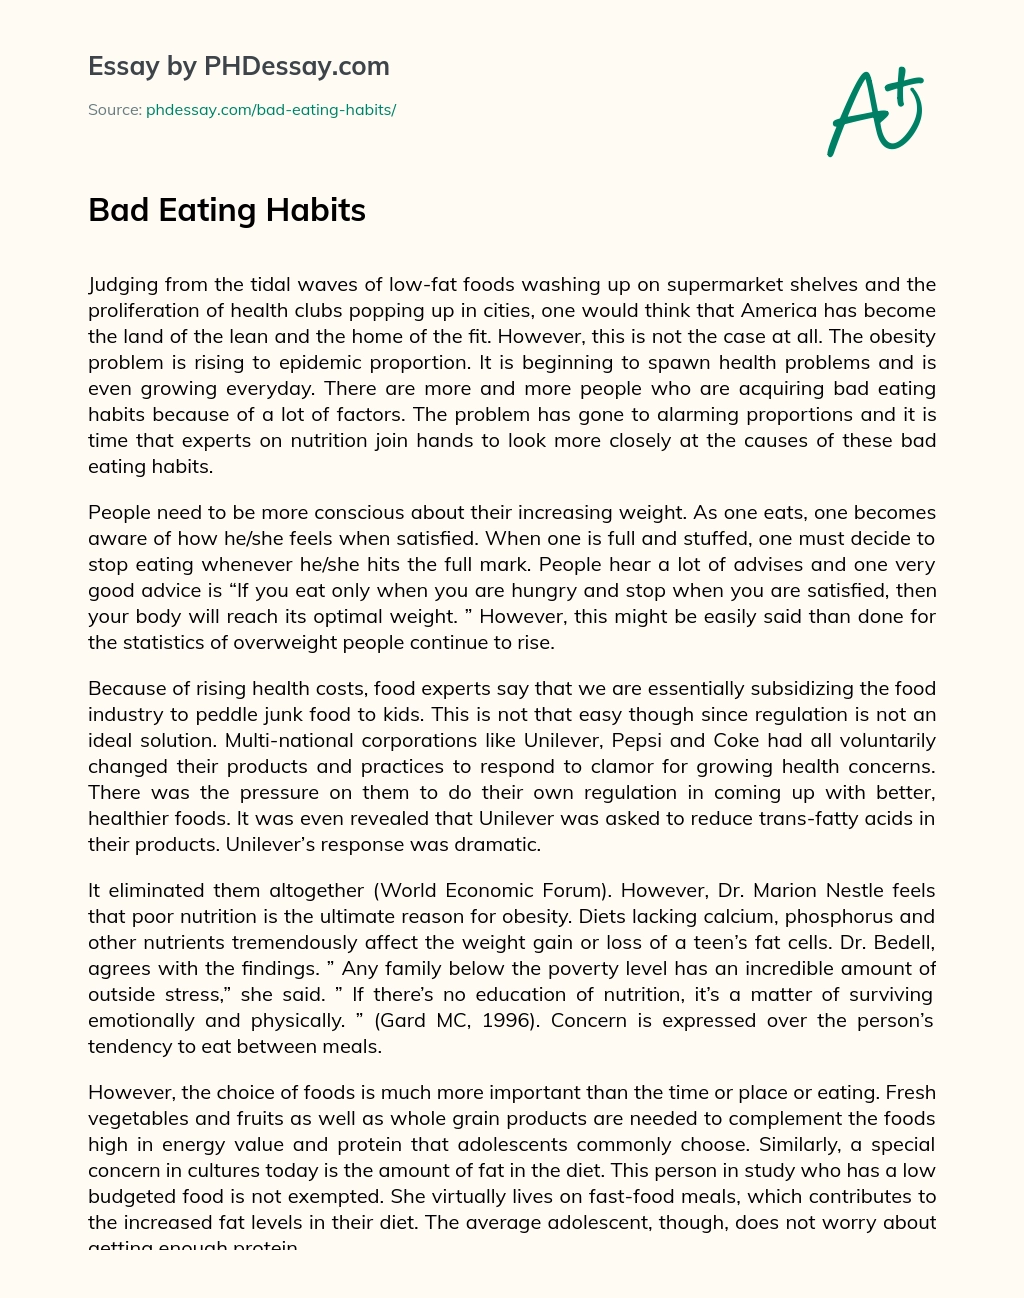 Bad Eating Habits essay